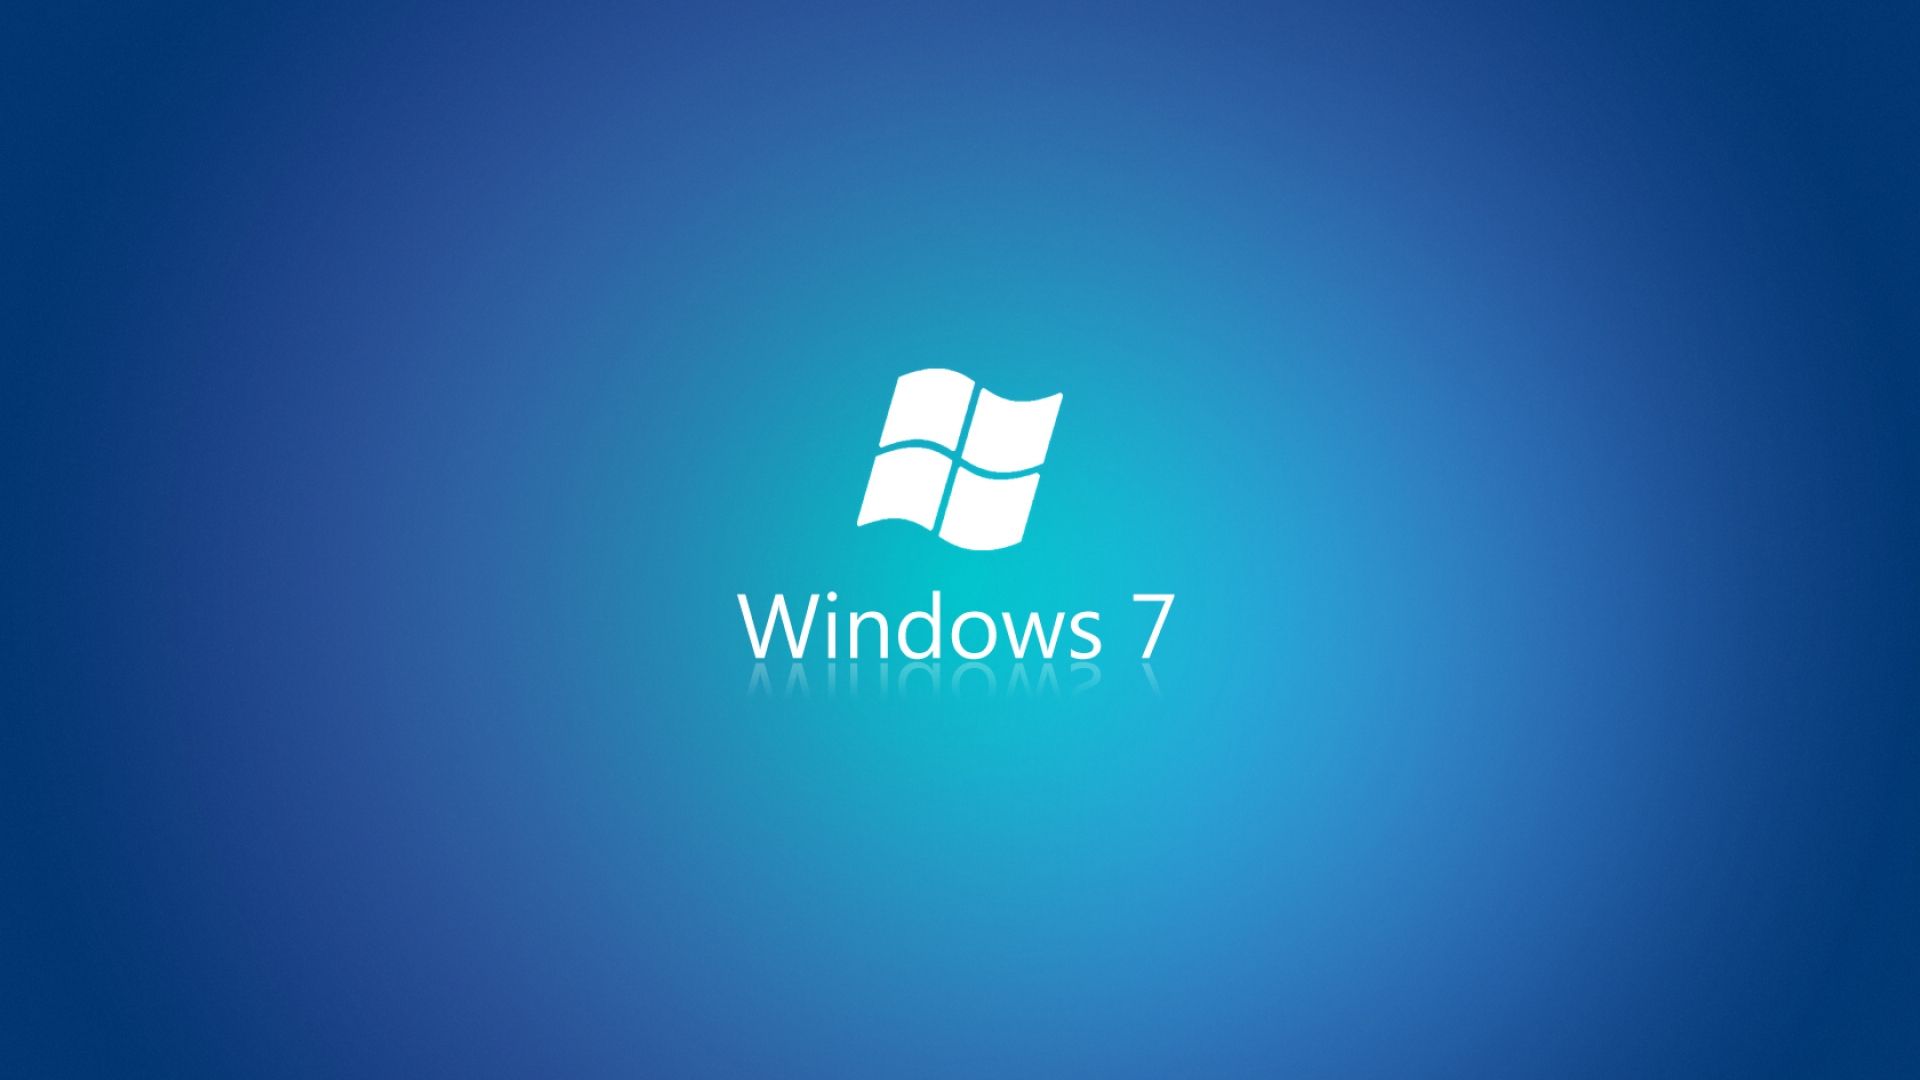 Windows 7 logo wallpaper - HD Backgrounds